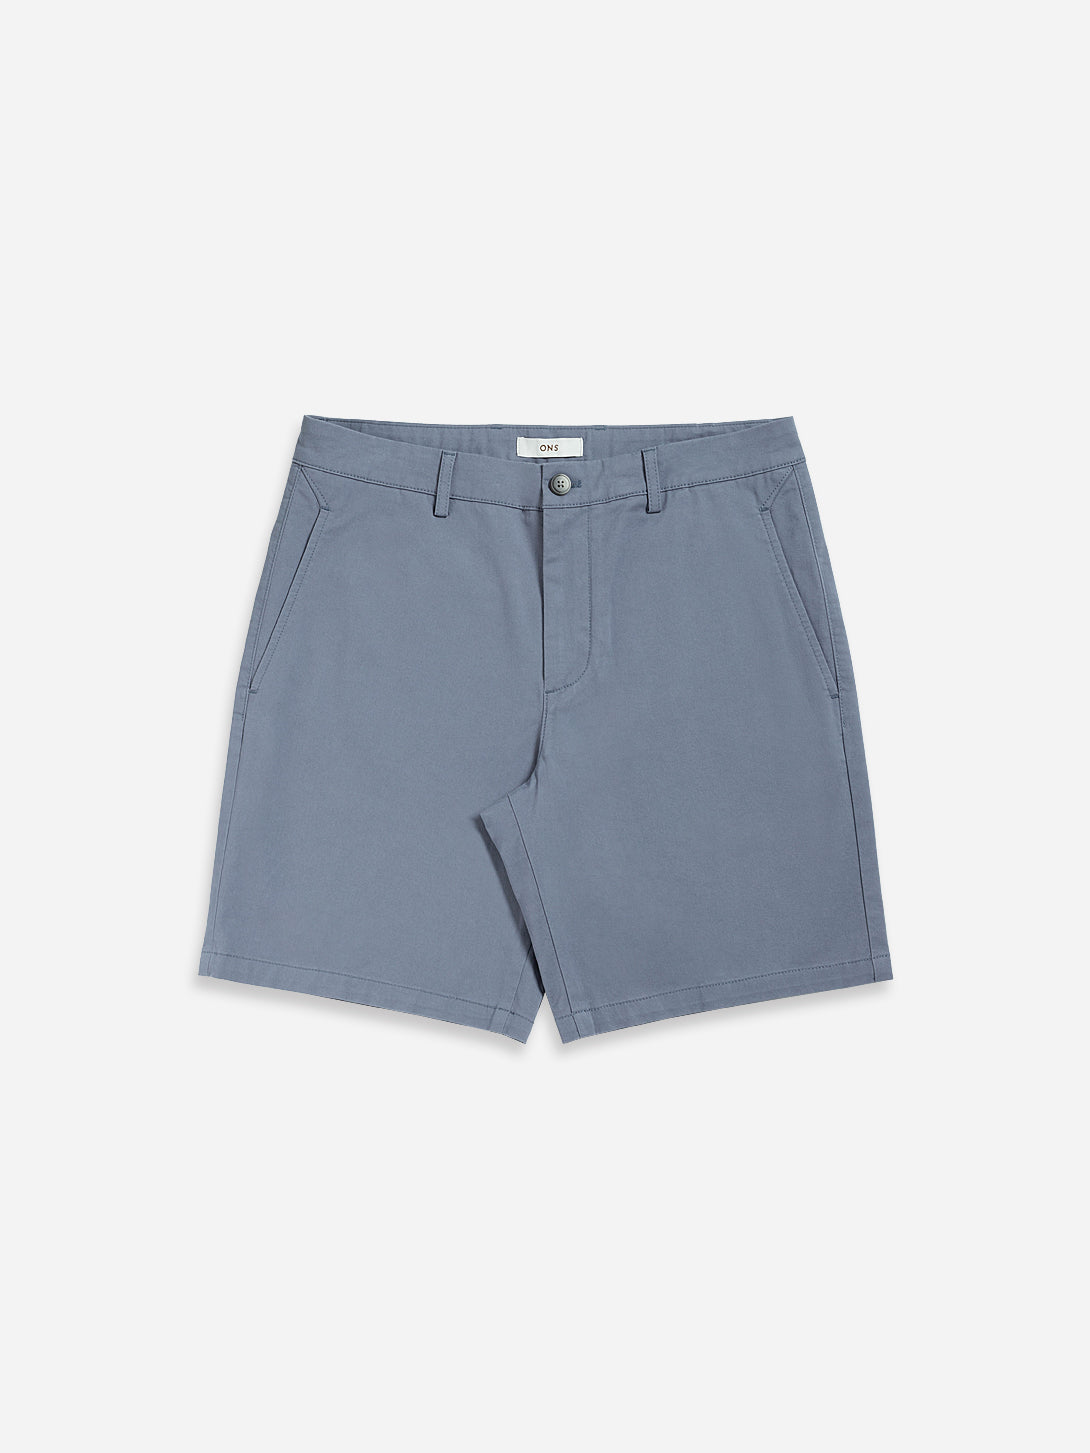 Gray Blue Jackson Stretch Shorts Mens Casual Short